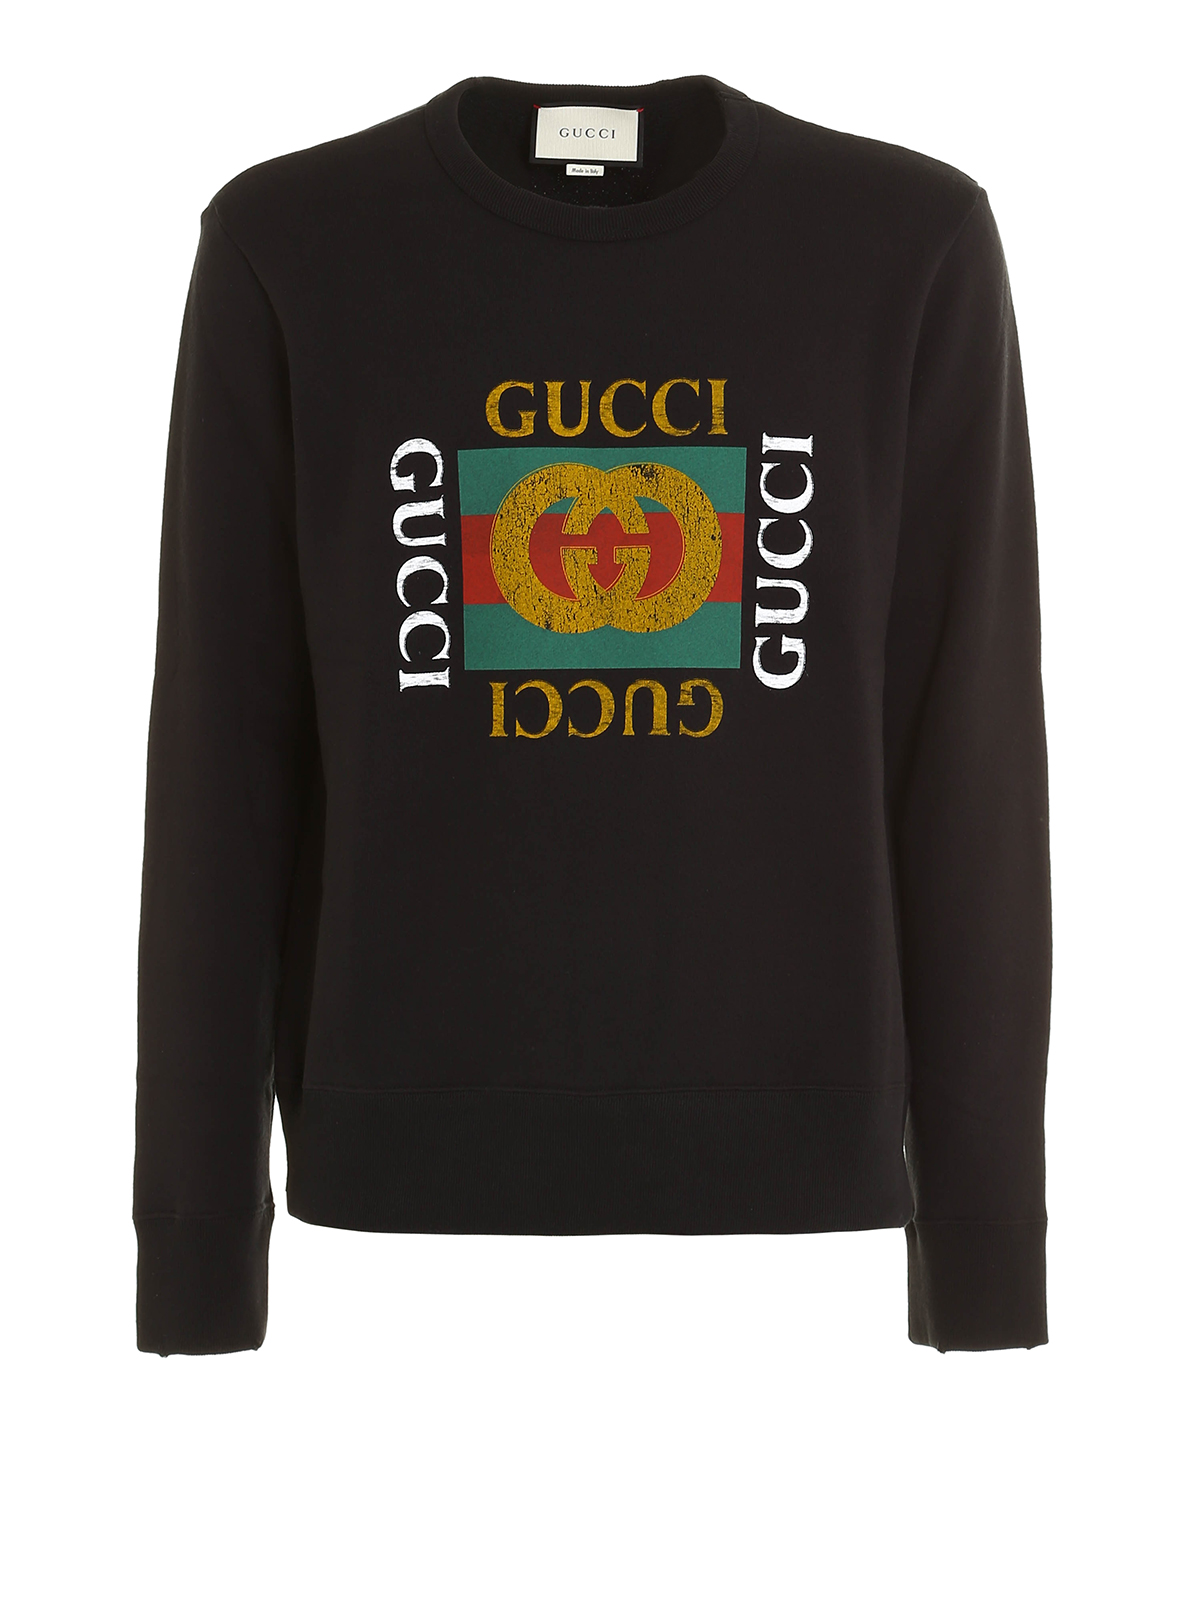 Gucci - Gucci print sweatshirt 